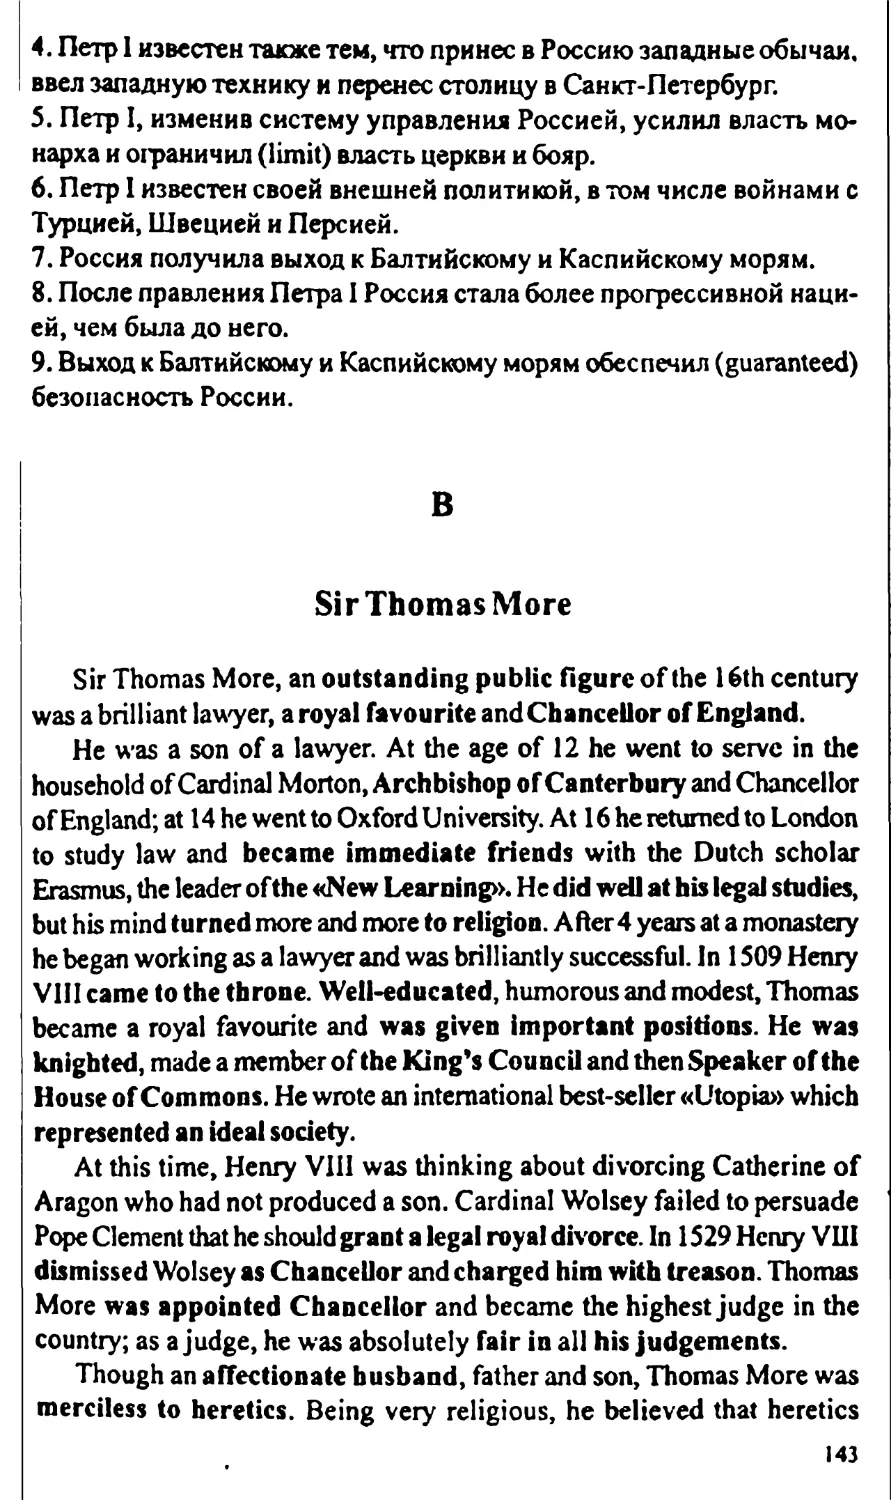 B. Sir Thomas More